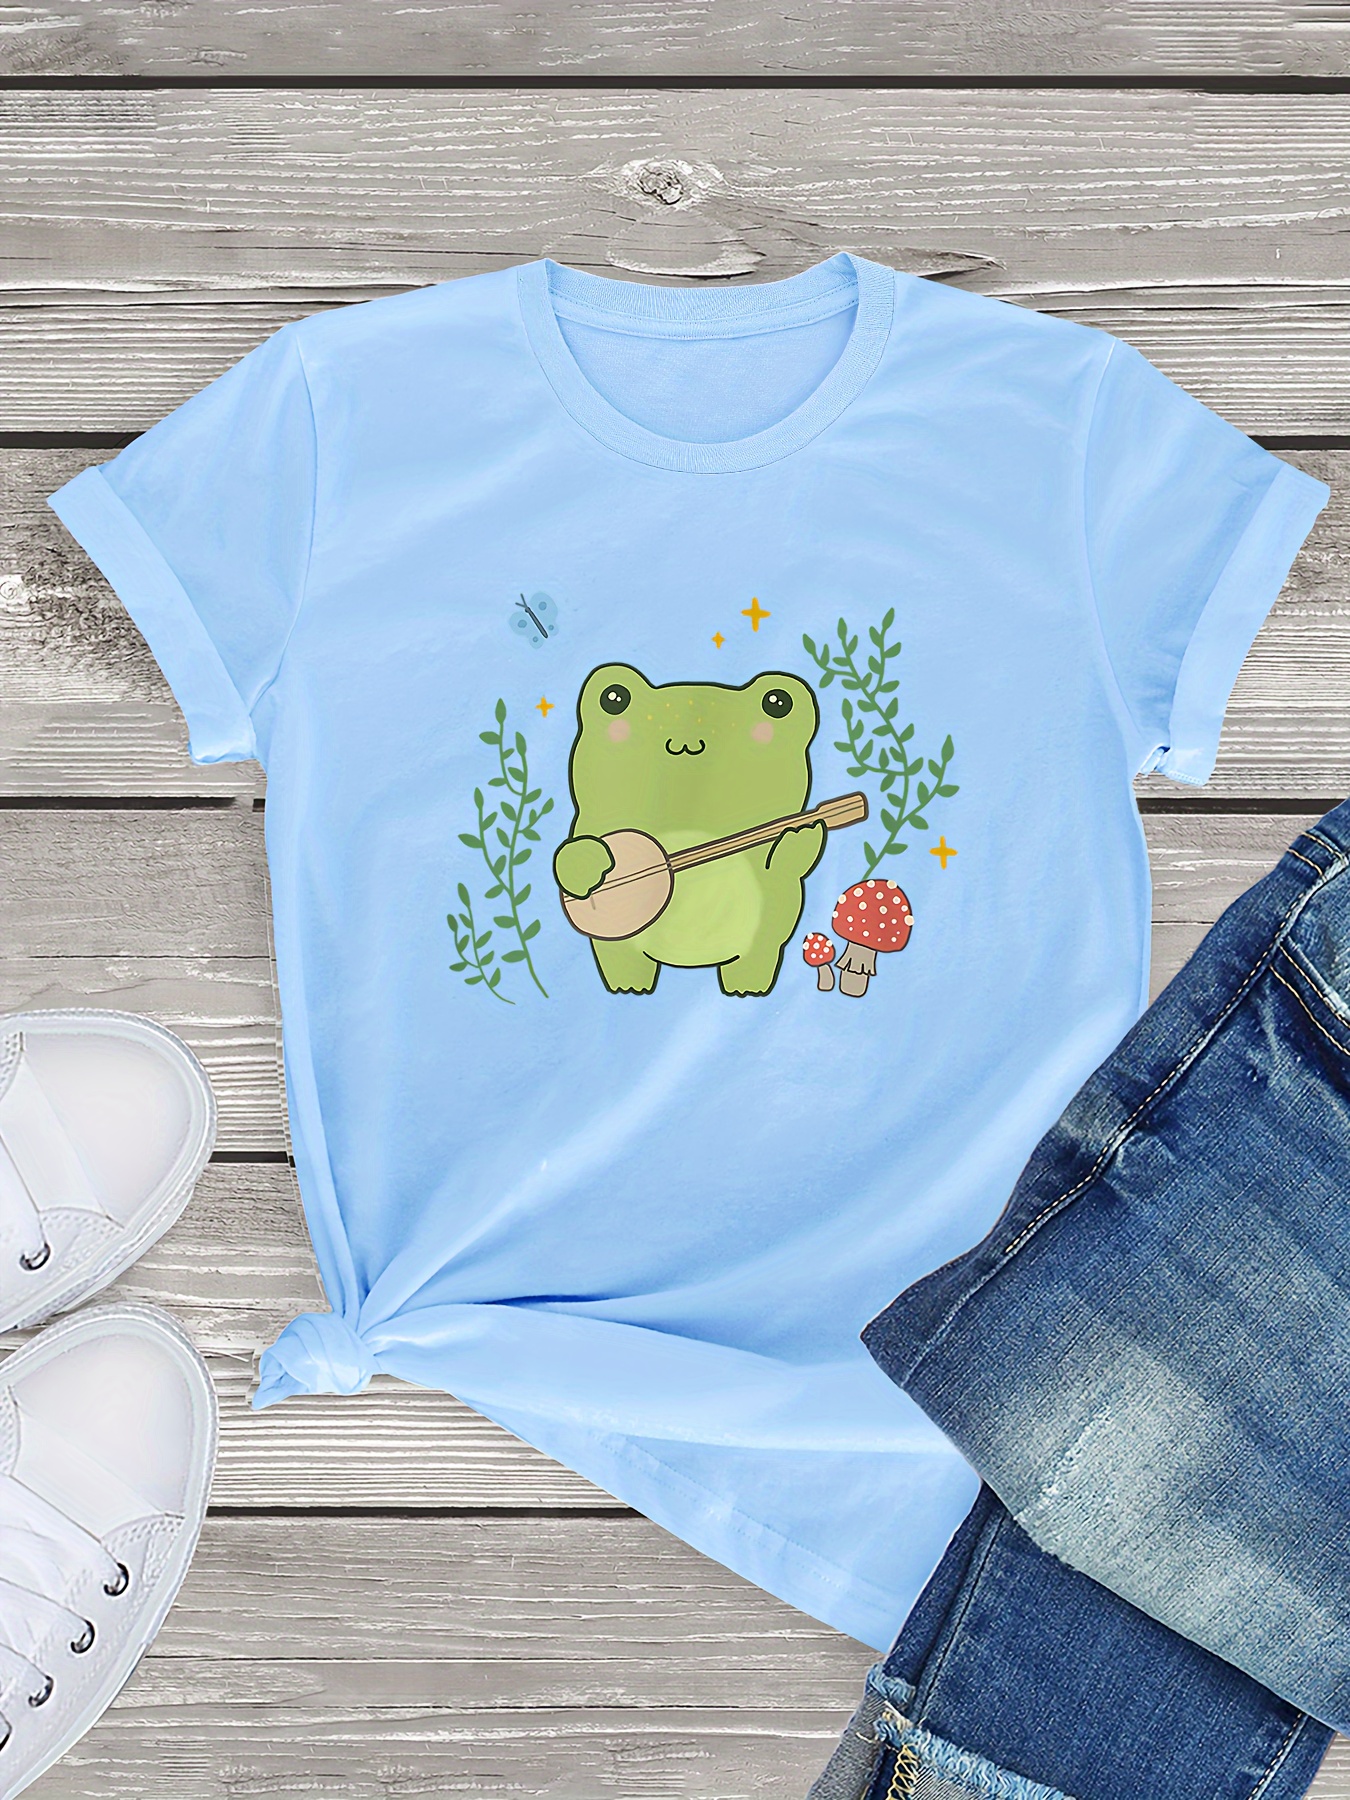 Cartoon Graphic Plants Print Crew Neck Cotton T-Shirt, Blouses, Tee, Women's Frog Print Casual Short Sleeve Spring Summer Women's Clothing T-Shirt